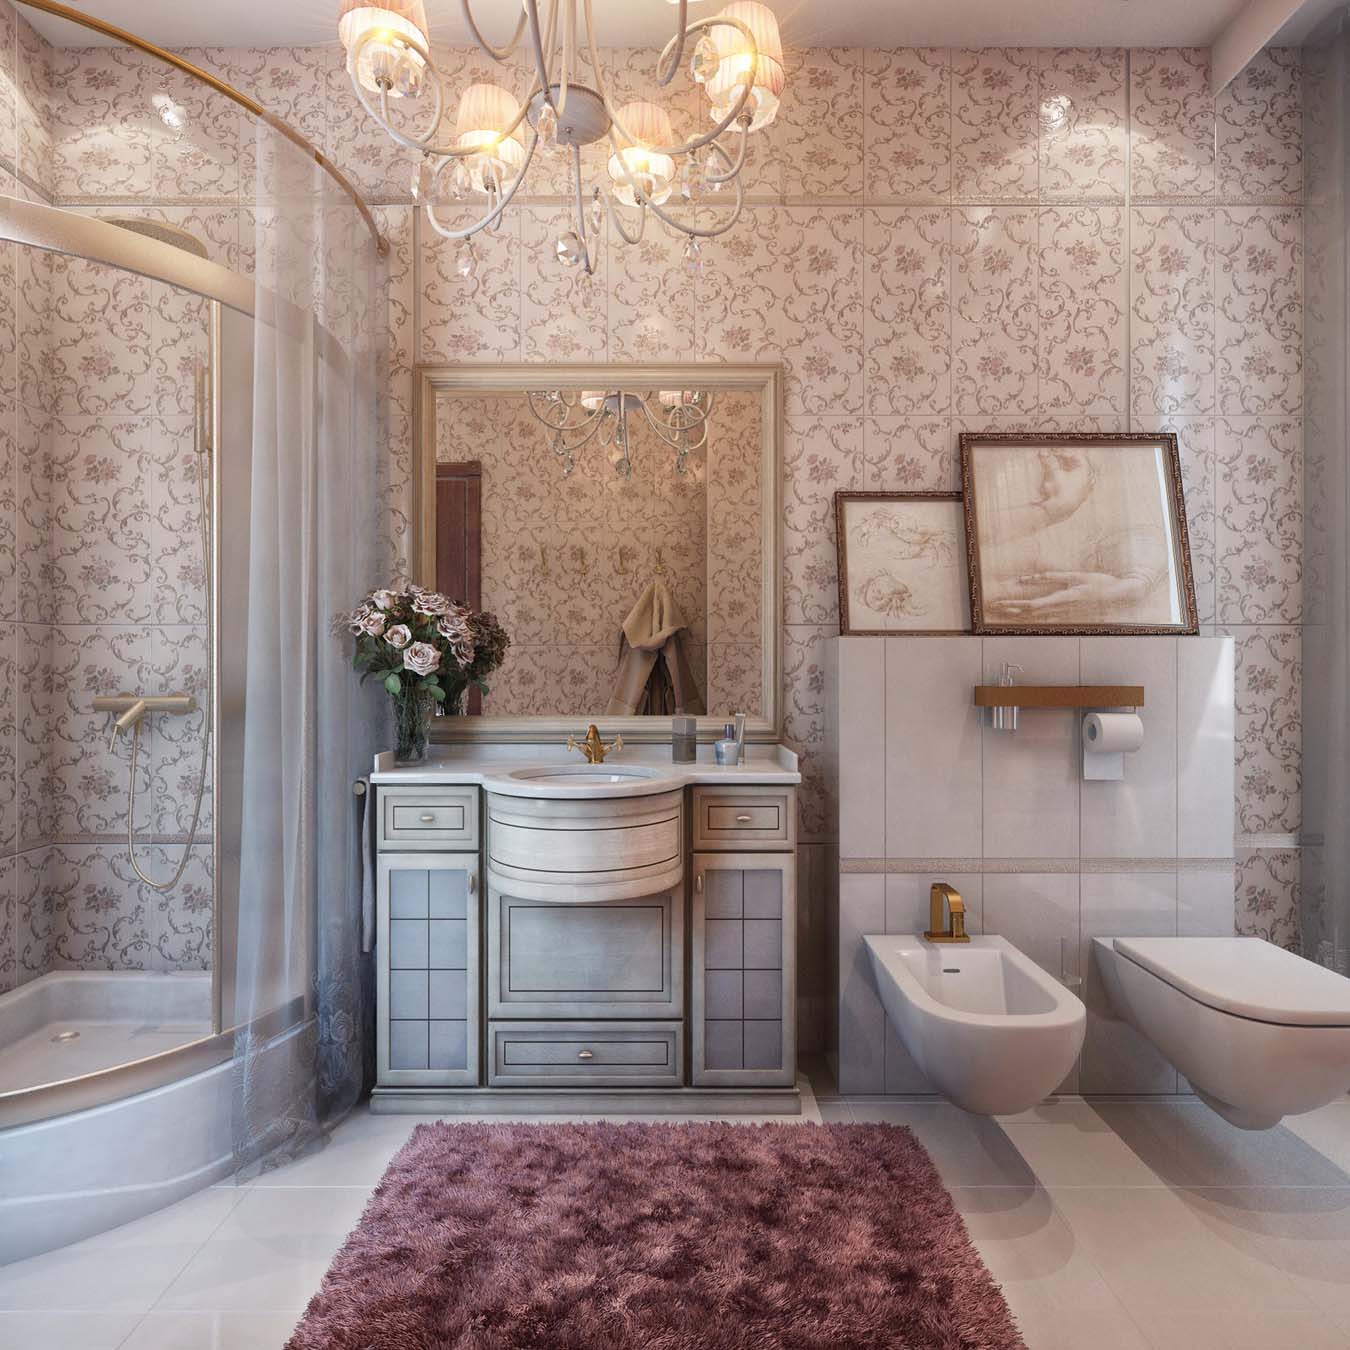 French Classic Interior Of The Bathroom Classic Interior Design